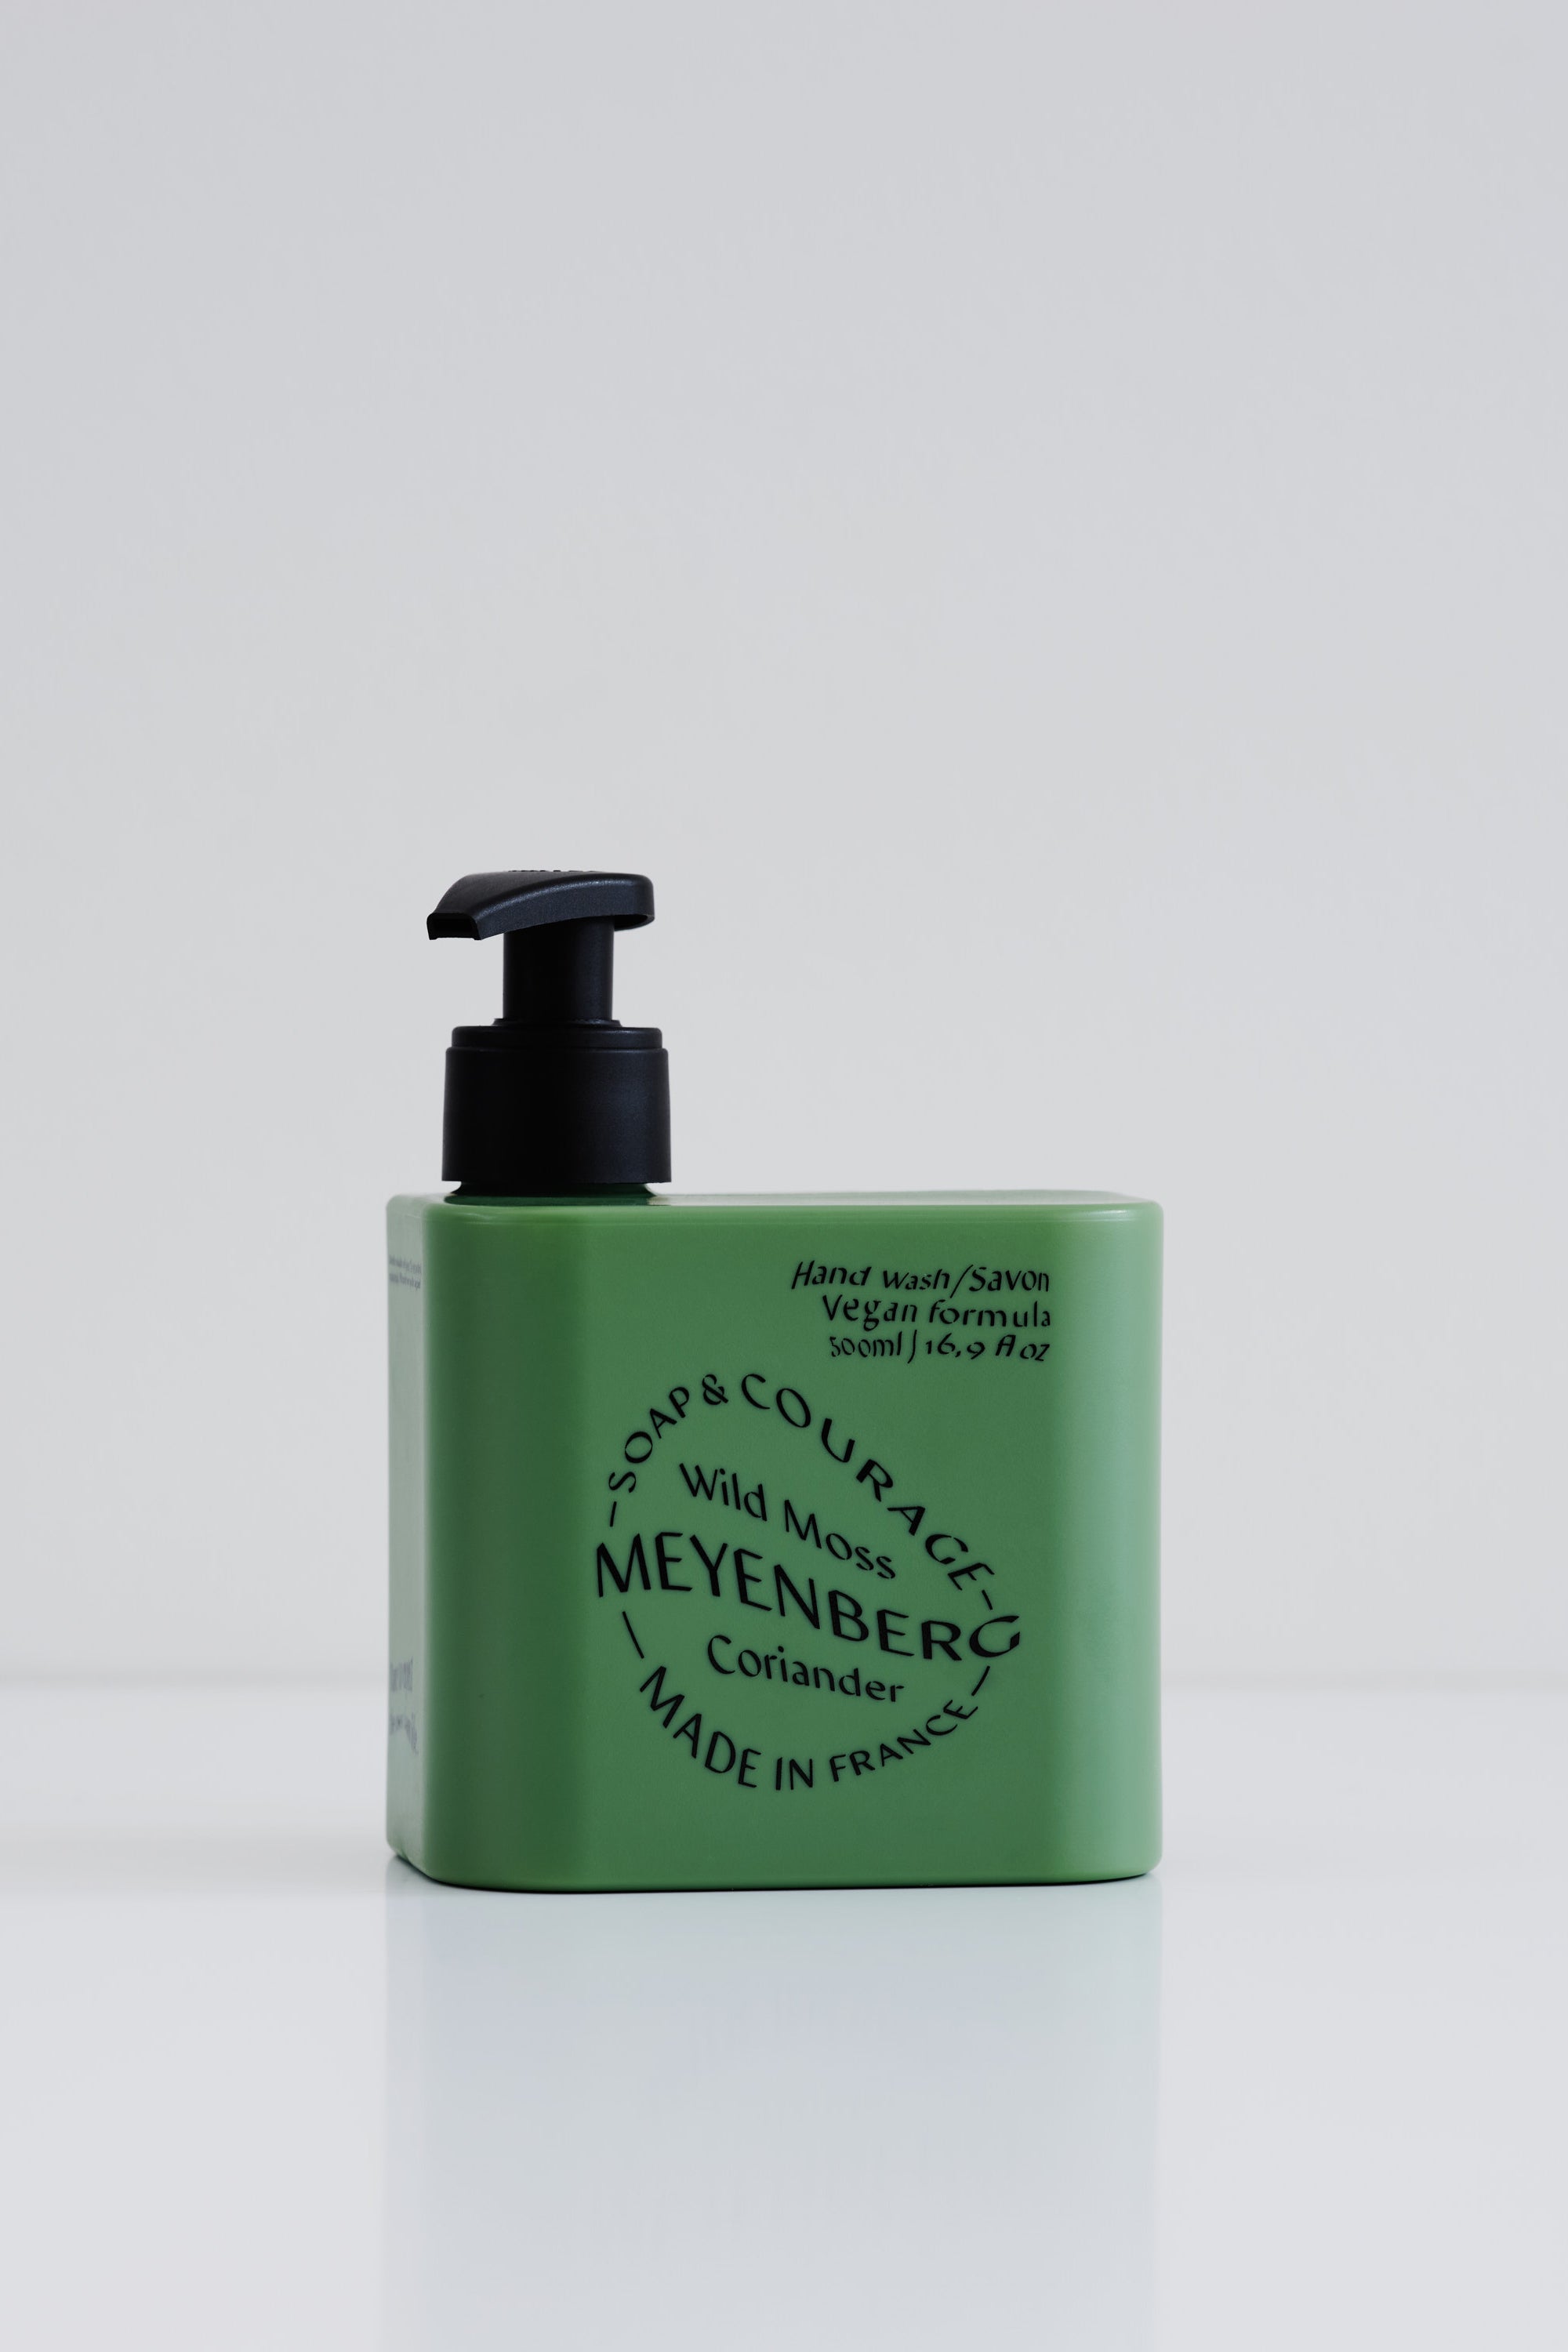 Hand wash wild moss & coriander-Meyenberg-KIOSK48TH